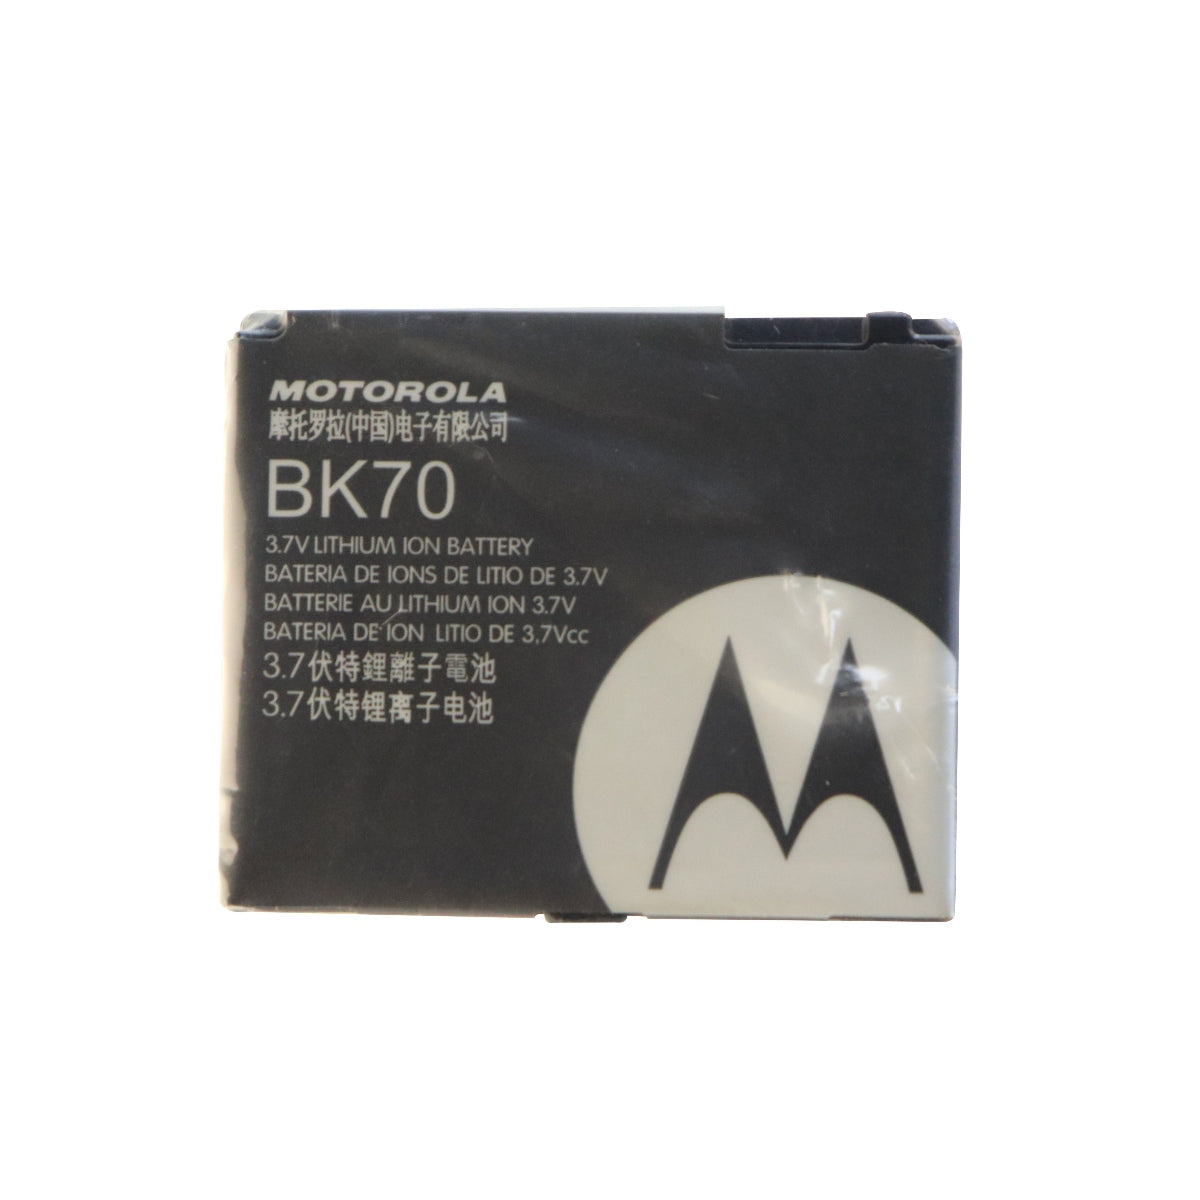 OEM Motorola BK70 1100 mAh Replacement Battery forMotorola IC402 Cell Phone - Batteries Motorola    - Simple Cell Bulk Wholesale Pricing - USA Seller